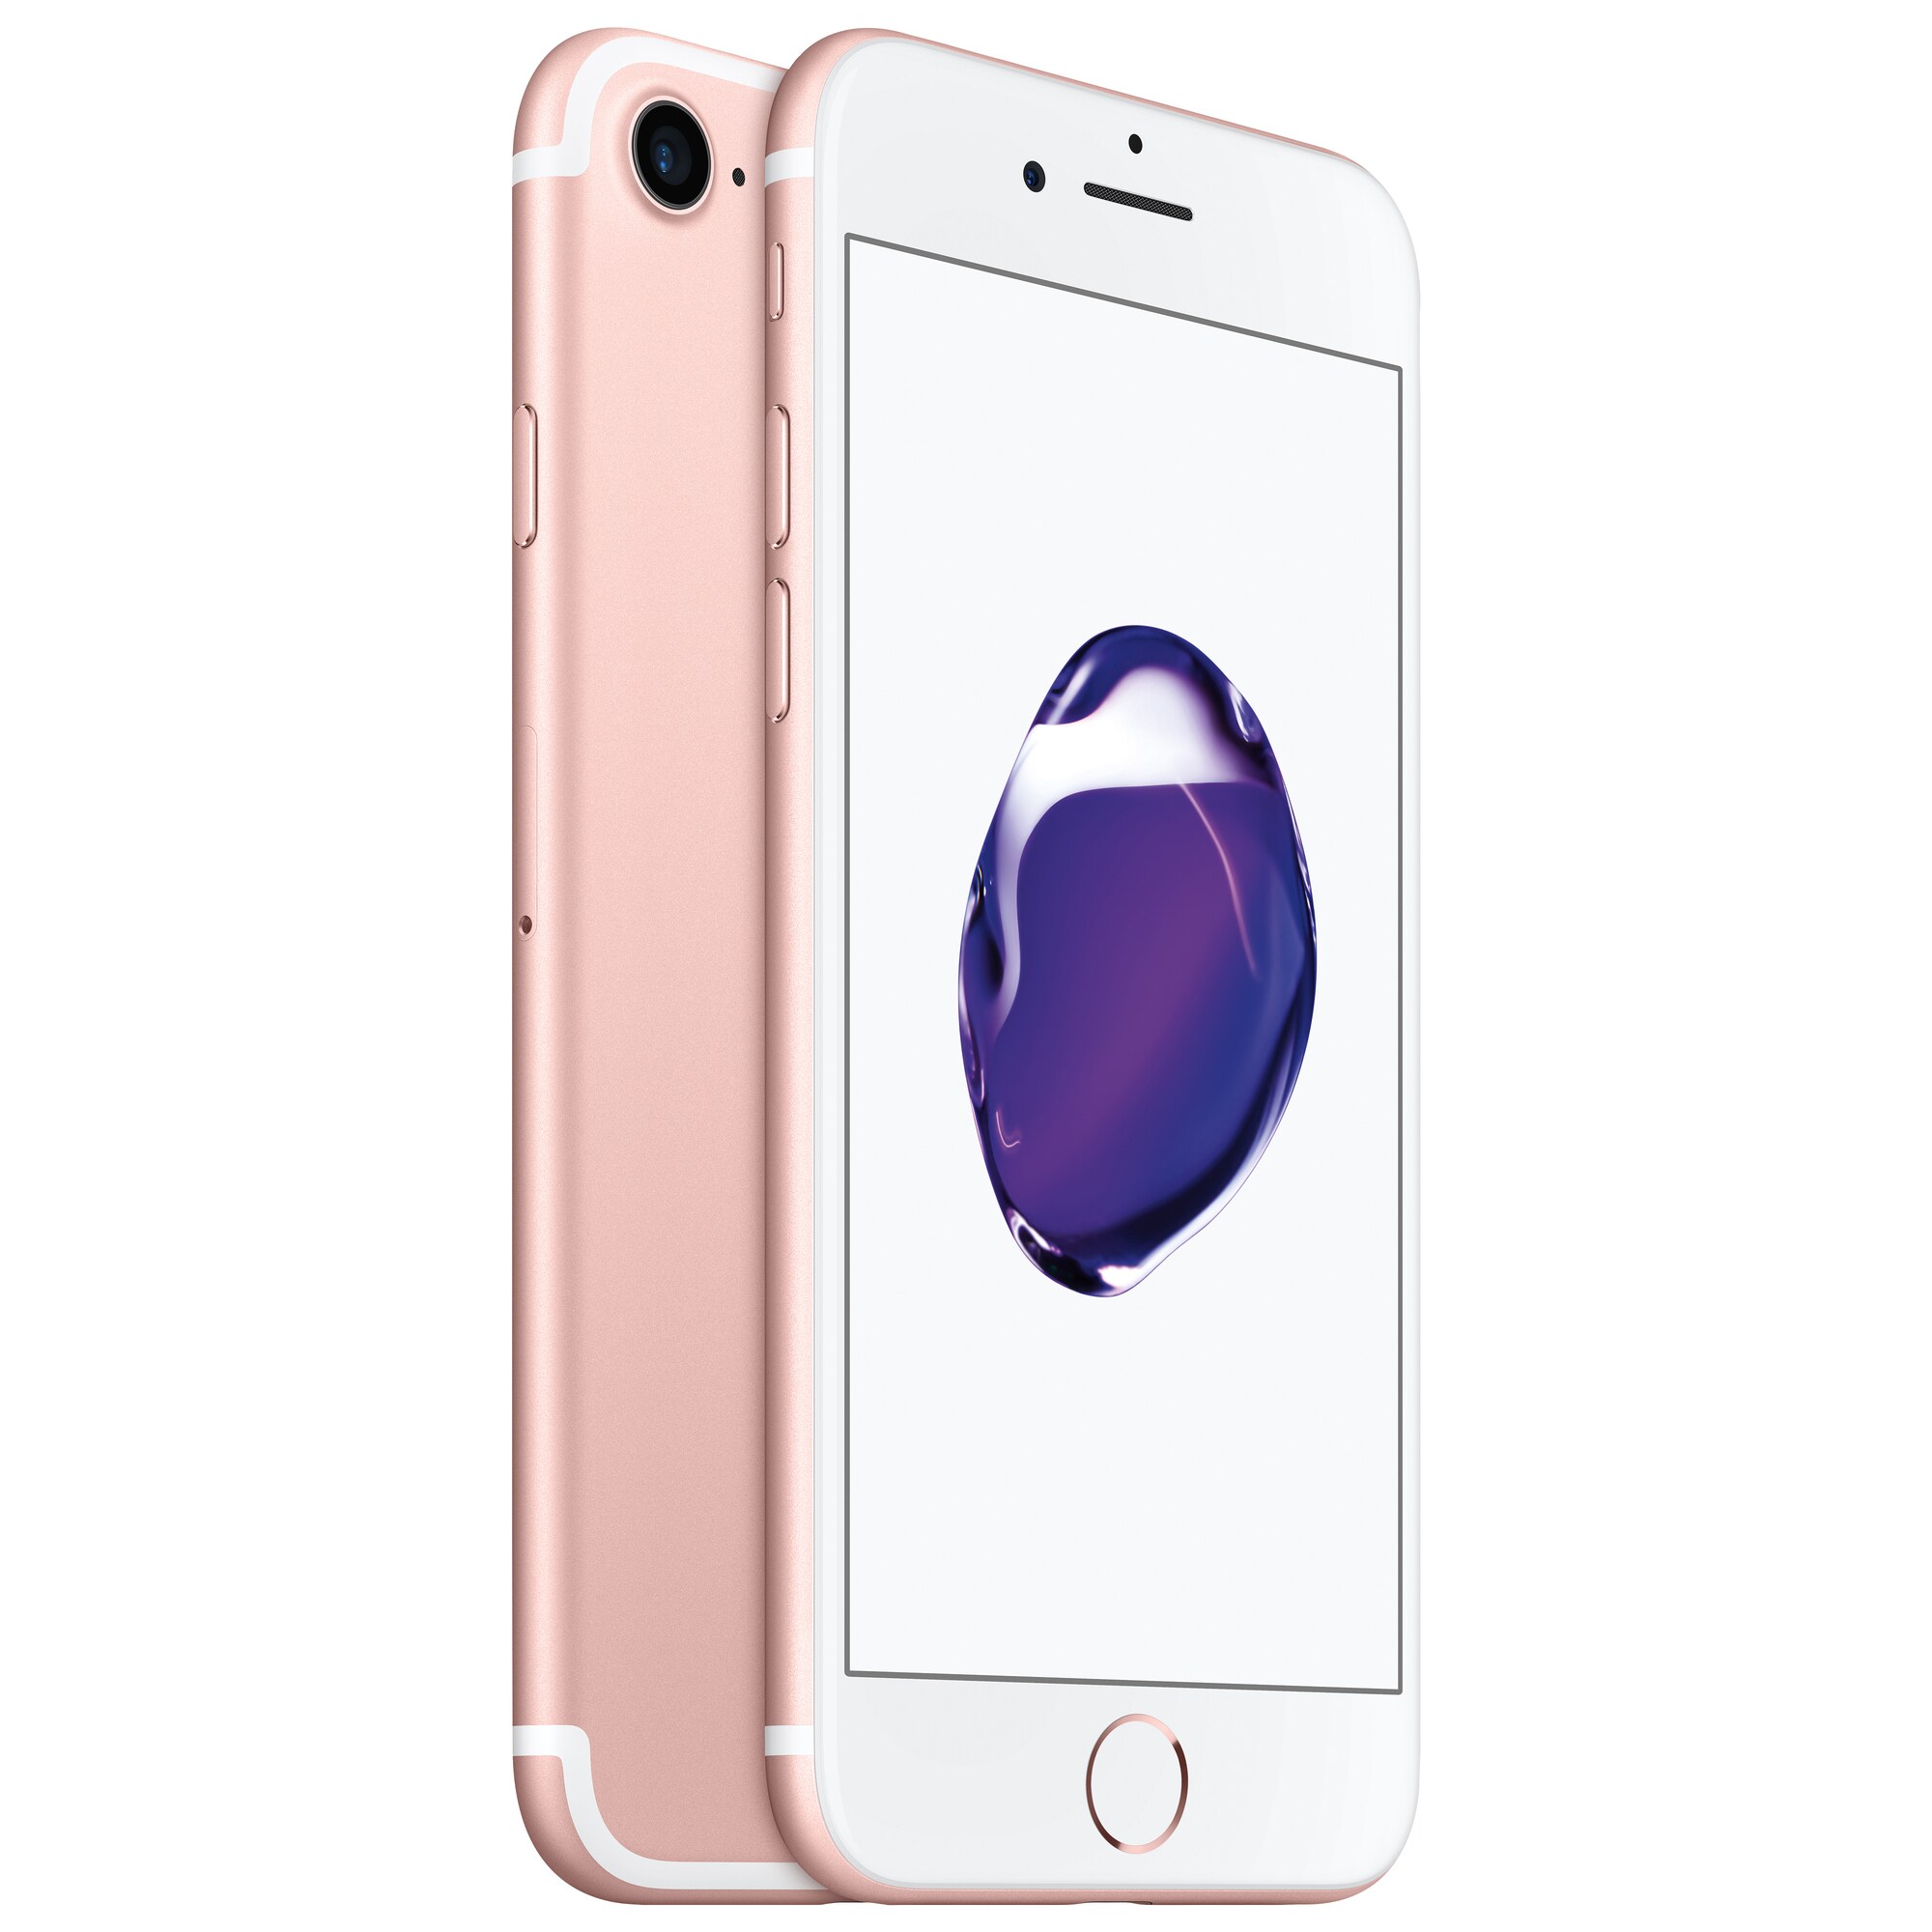 iPhone 7 32 GB (roséguld) - Mobiltelefoner - Elgiganten